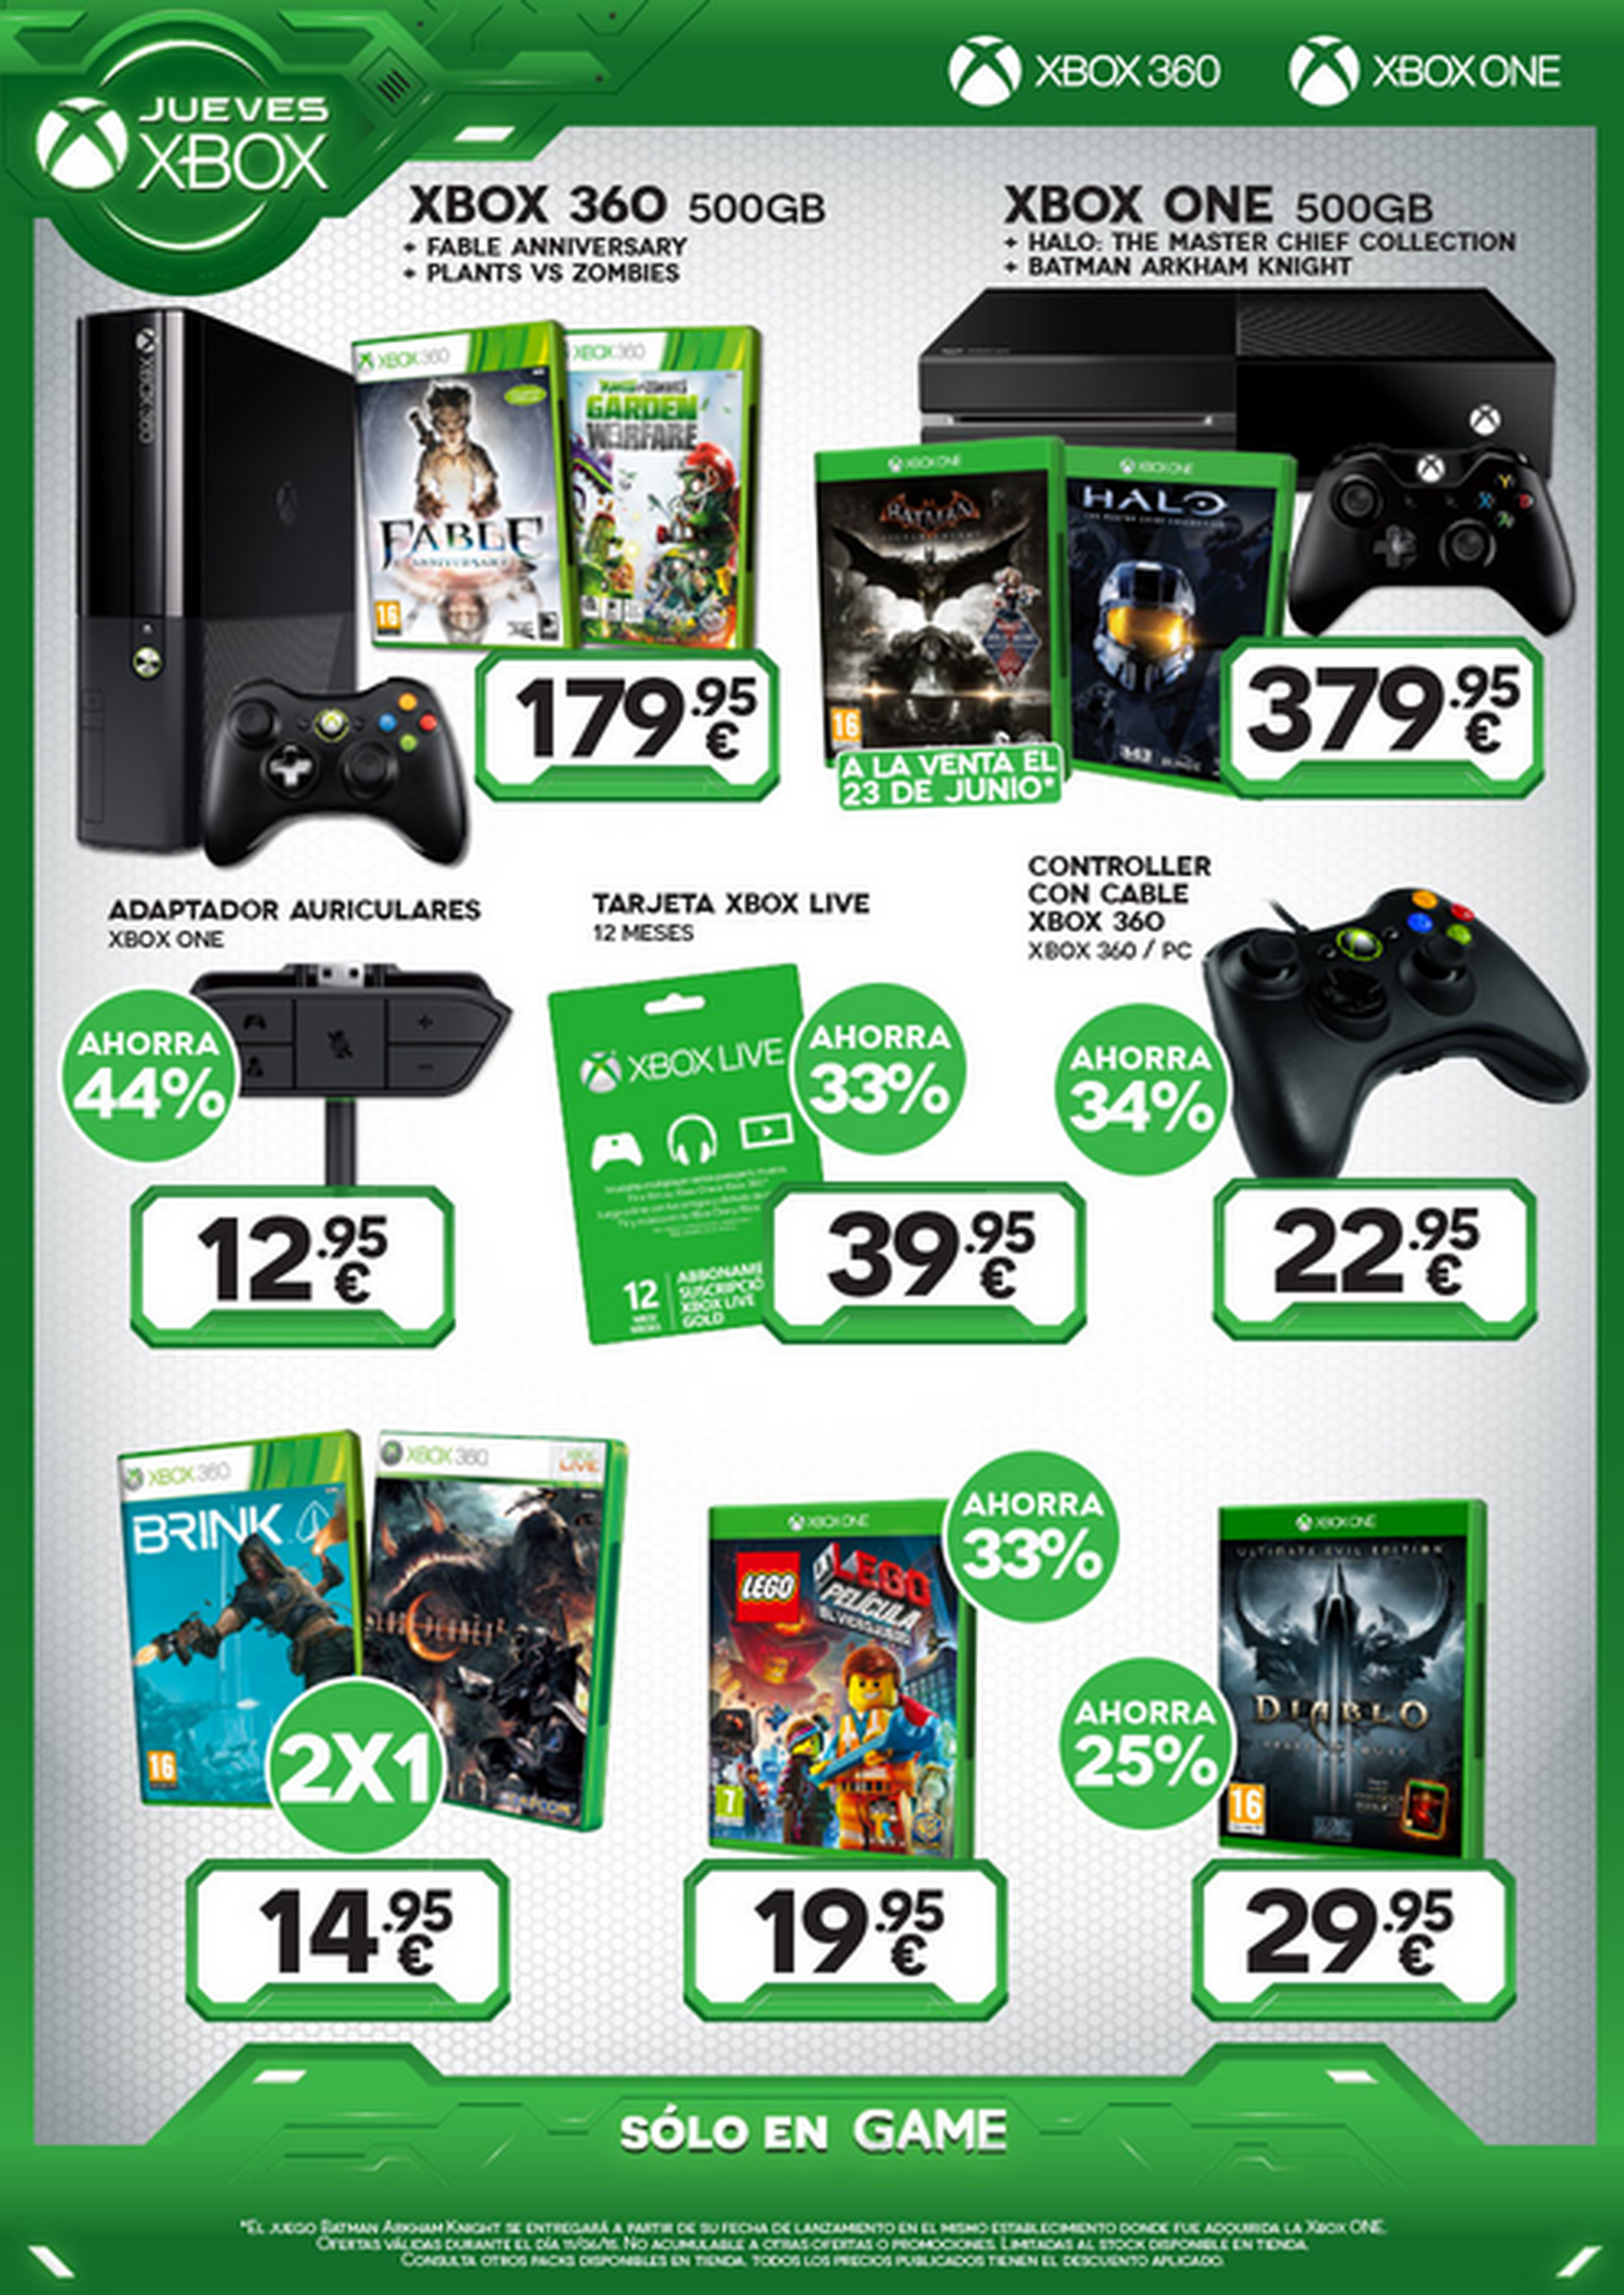 Jueves Xbox en GAME: Decimoquinta semana de ofertas